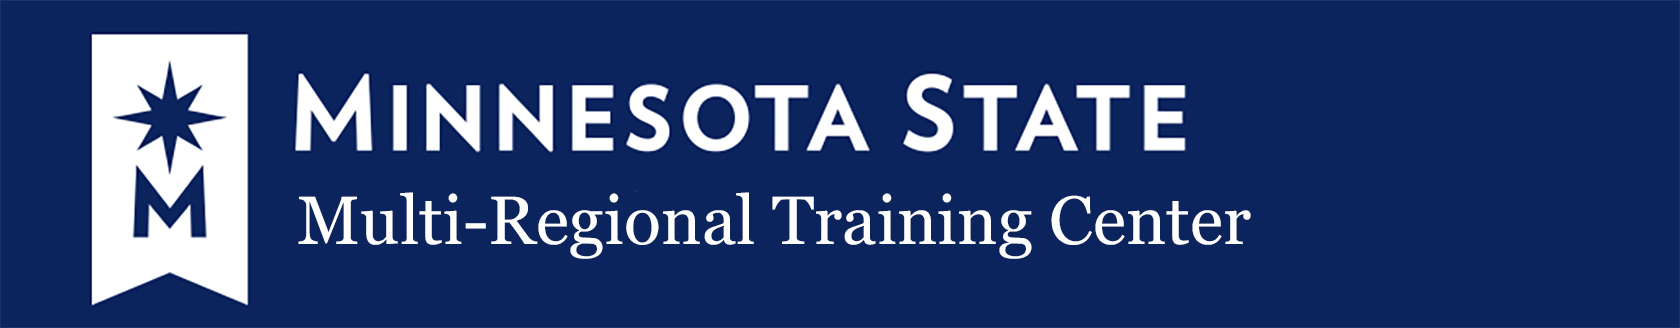 Minnesota State Multi-Regional Training Center Logo